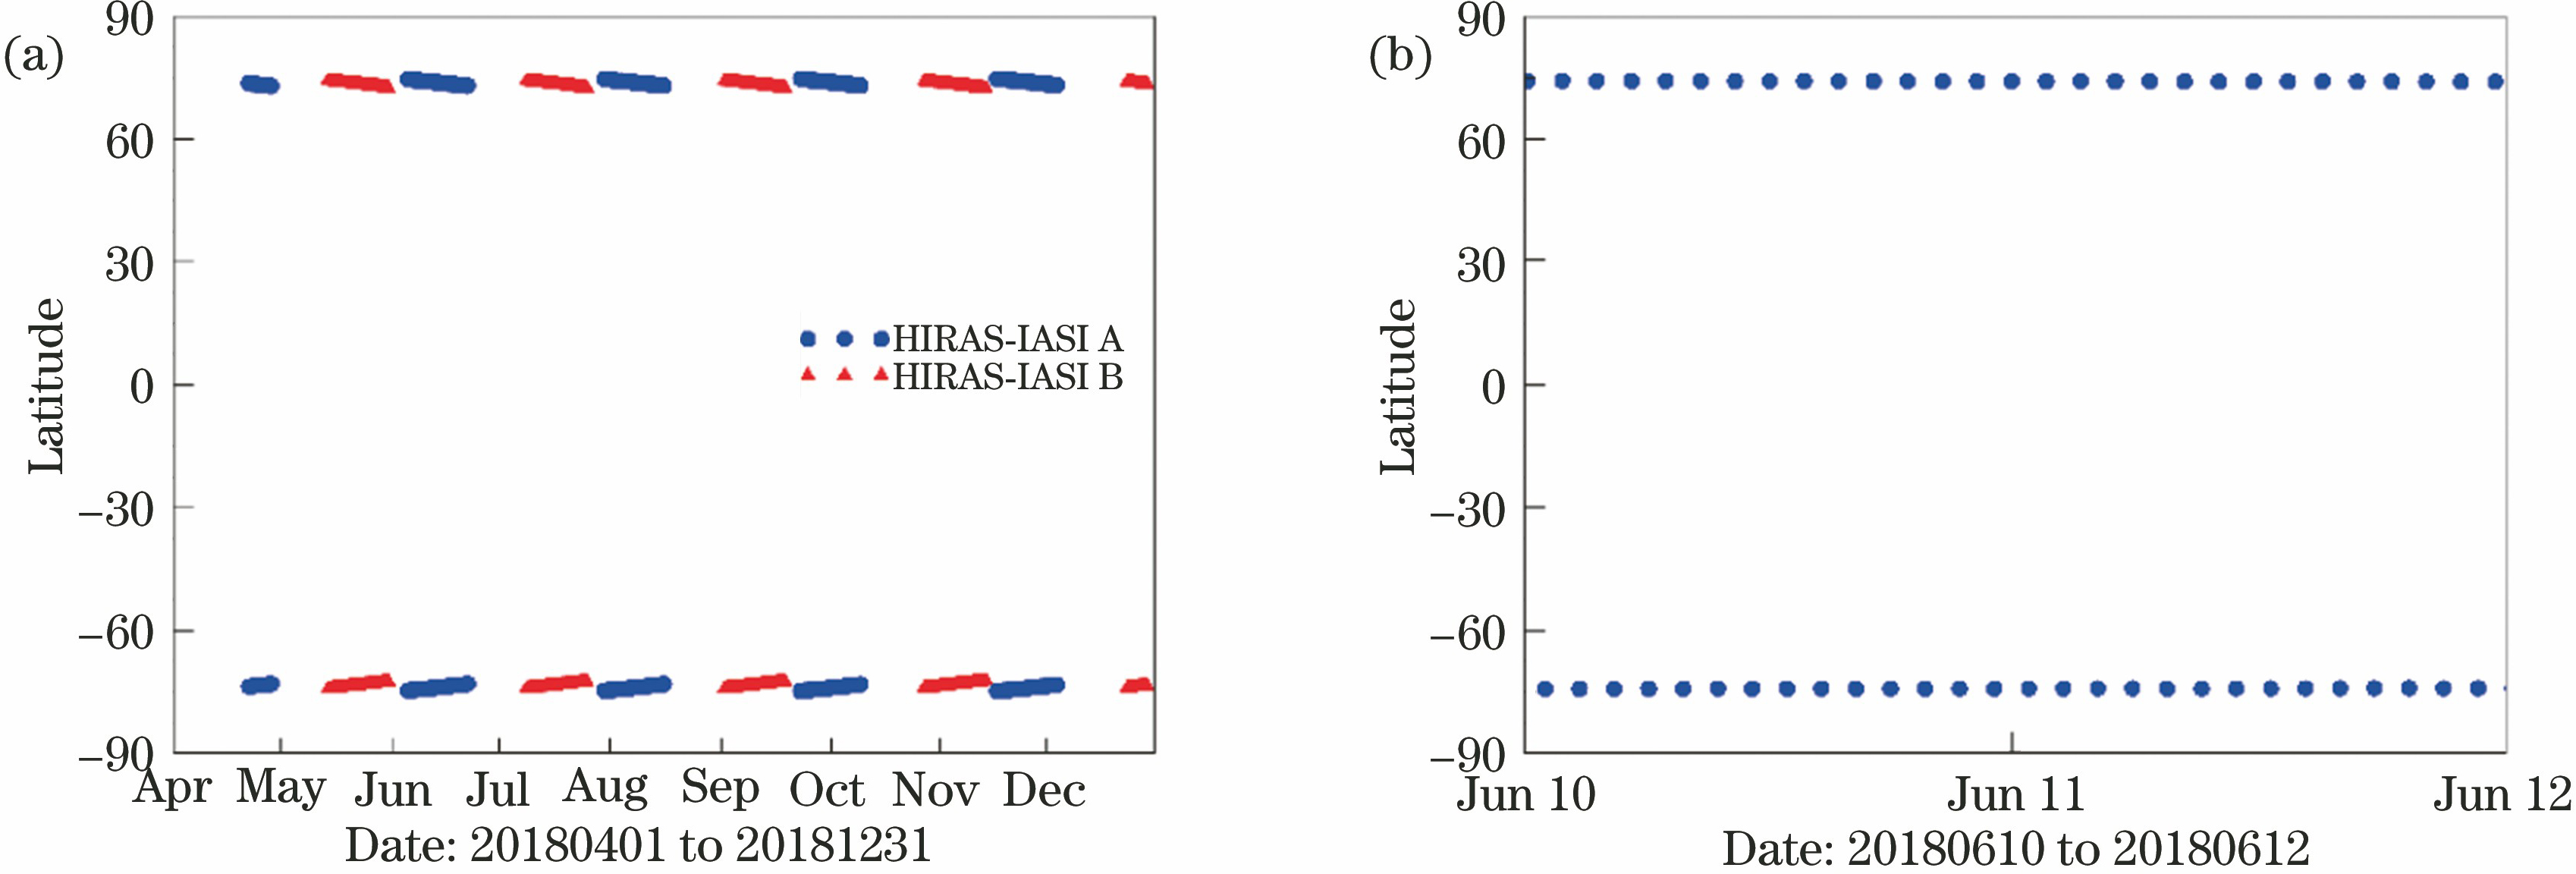 Long-term latitude distributions of SNO events of HIRAS-IASI/A and HIRAS-IASI/B. (a) Latitude distribution of SNO events of HIRAS-IASI/A and HIRAS-IASI/B from April to December, 2018; (b) latitude distribution of SNO events of HIRAS-IASI/A during 10-12 June, 2018